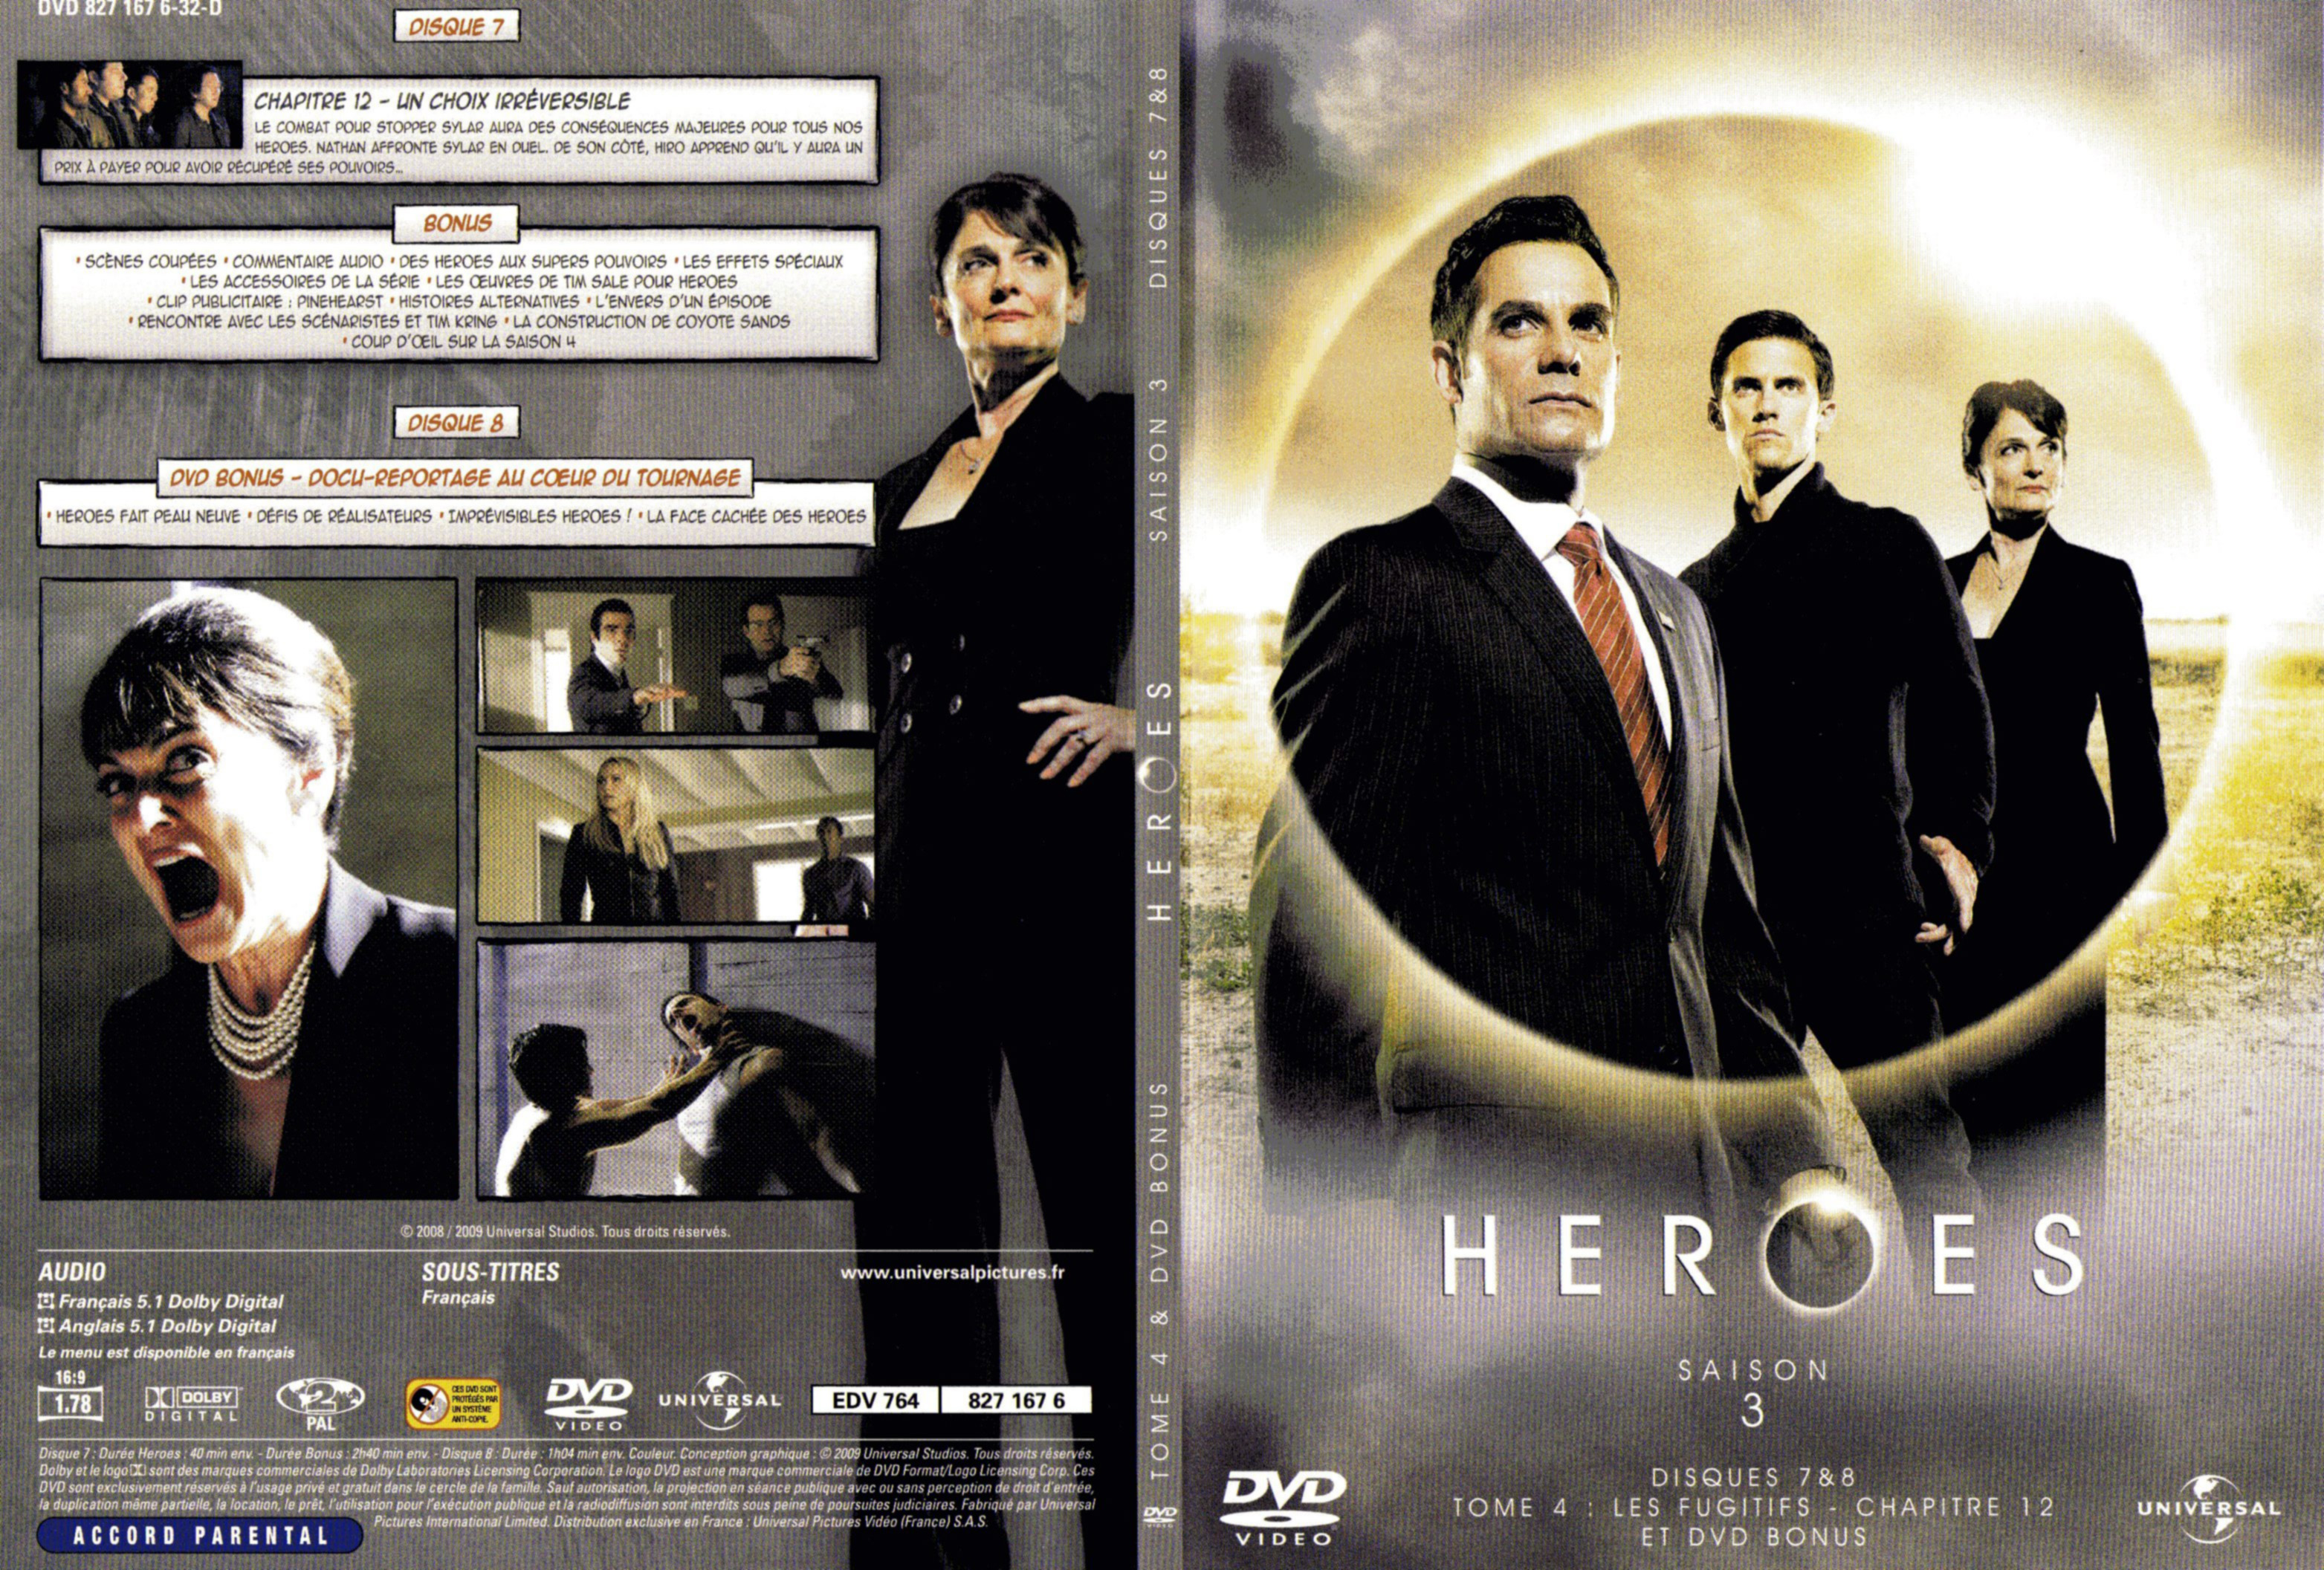 Jaquette DVD Heroes saison 3 DVD 4